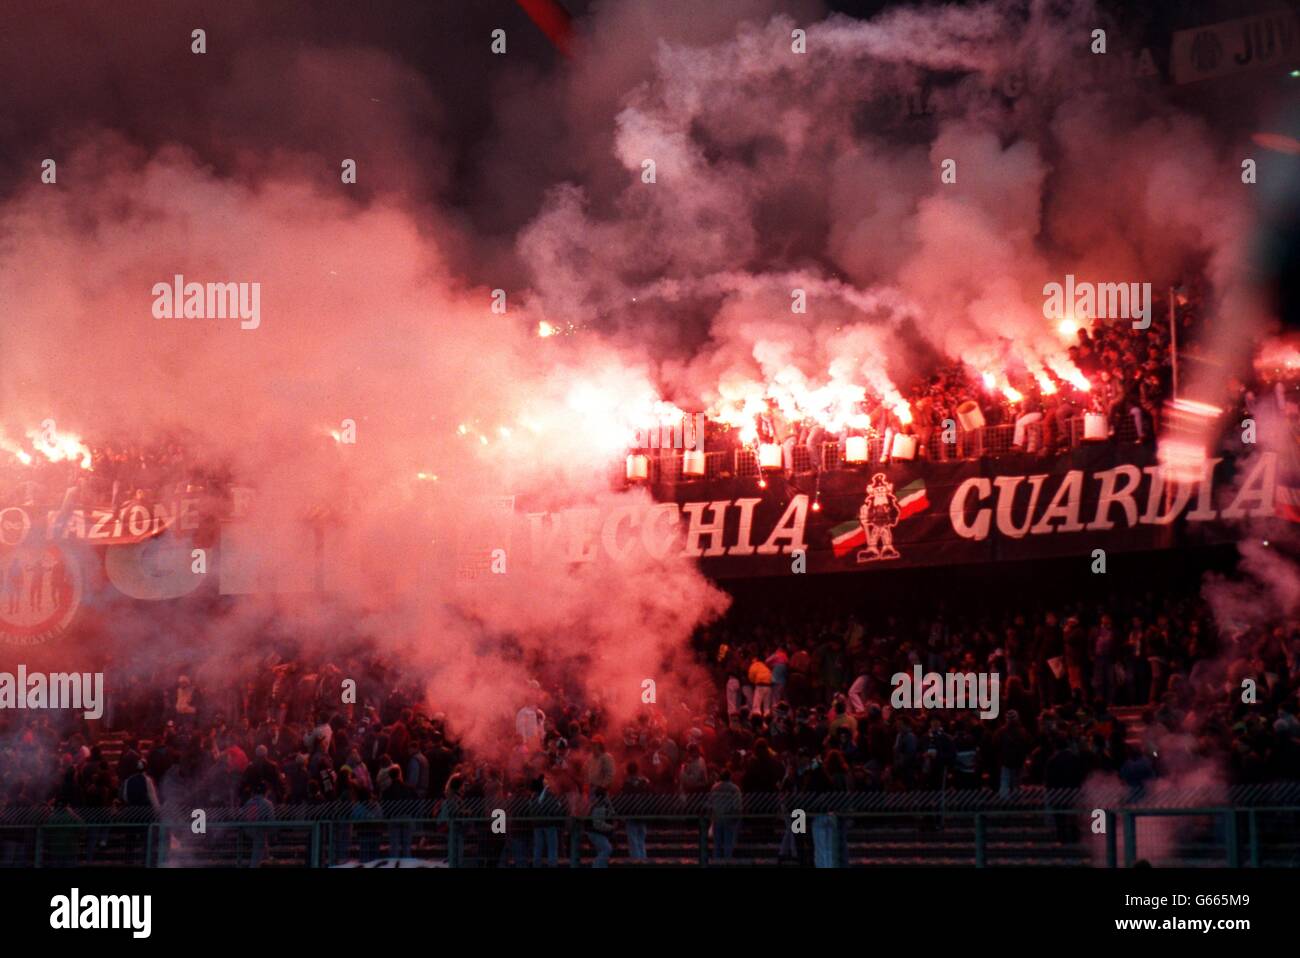 UEFA CHAMPIONS LEAGUE - JUVENTUS V NANTES ATLANTIQUE. Juventus fans set off flares in the Stadio Delle Alpi Stock Photo